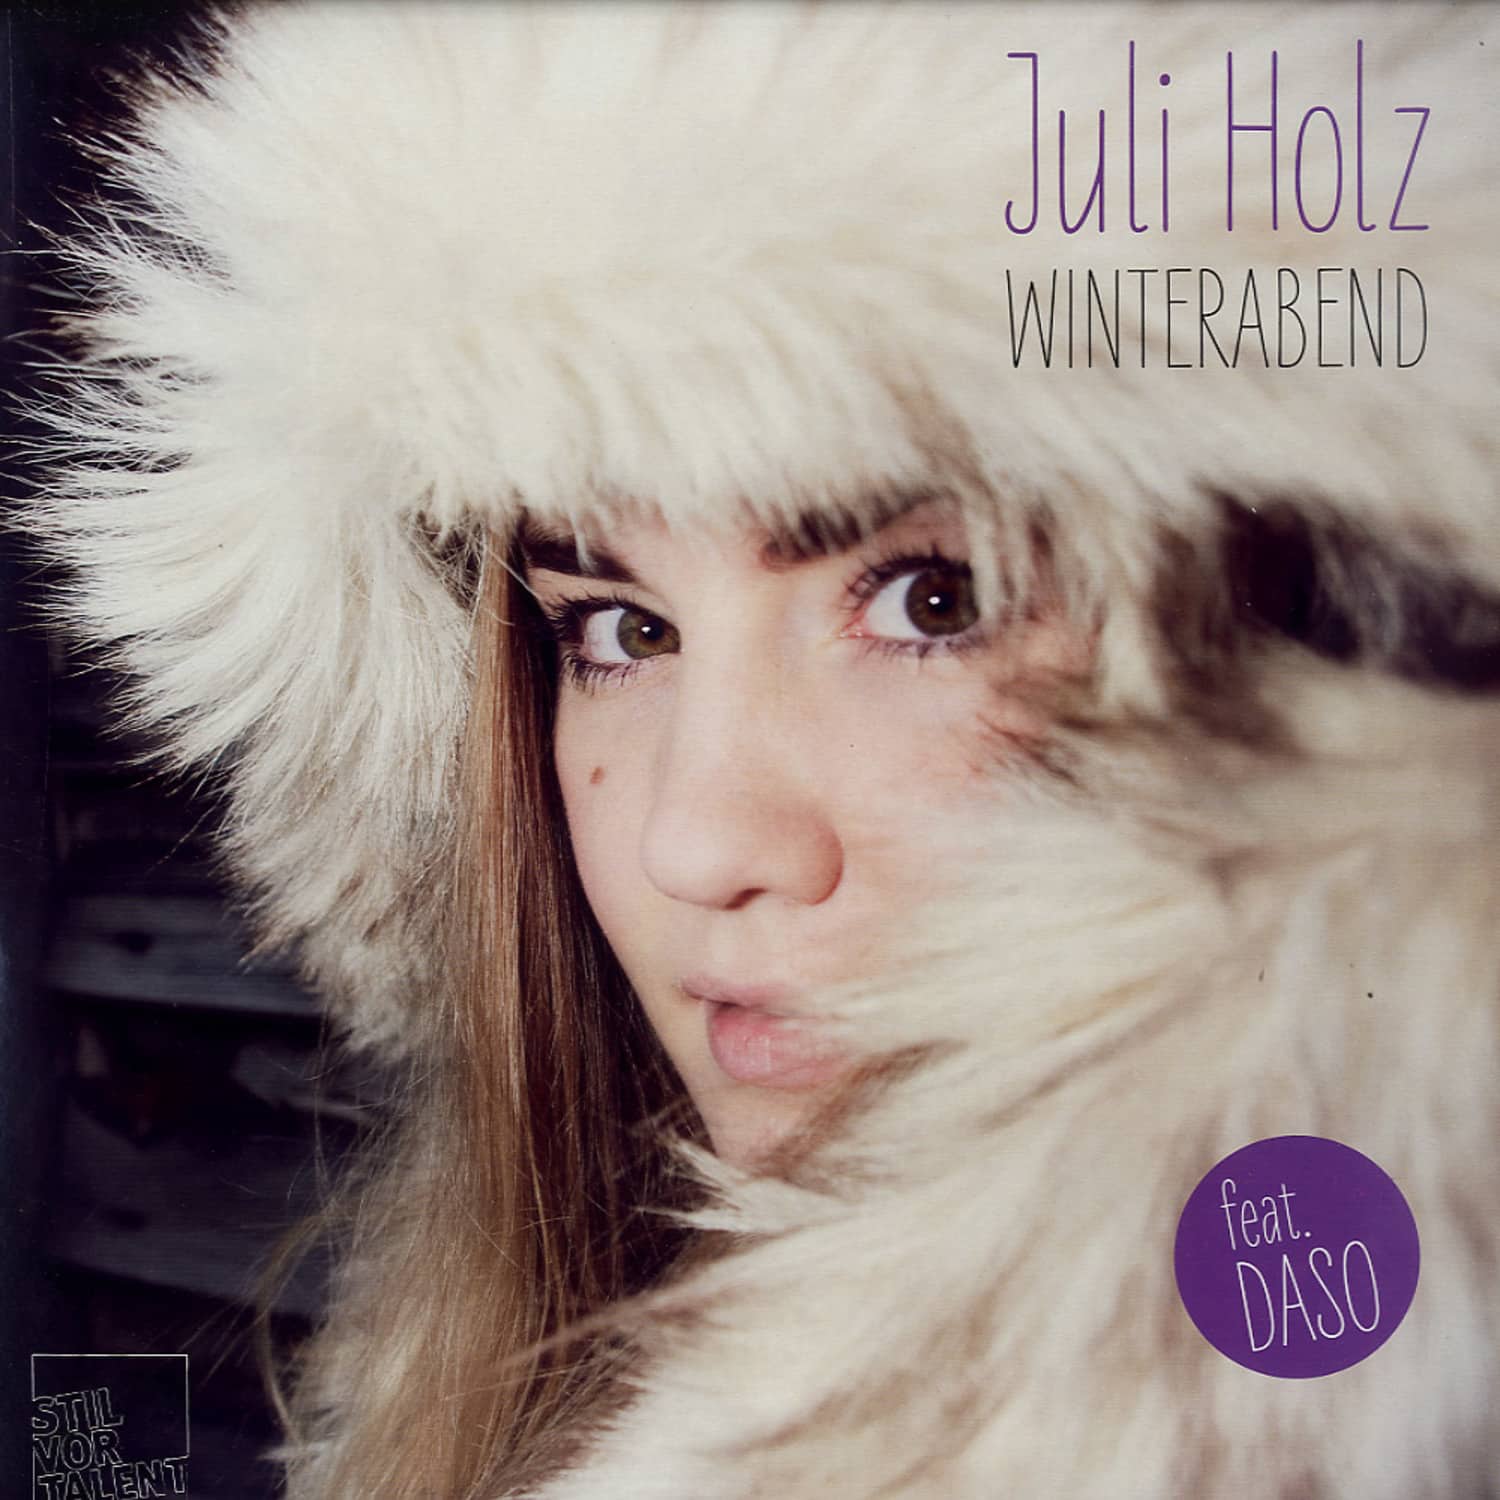 Juli Holz Feat Daso - WINTERABEND / OLIVER KOLETZKI REMIX